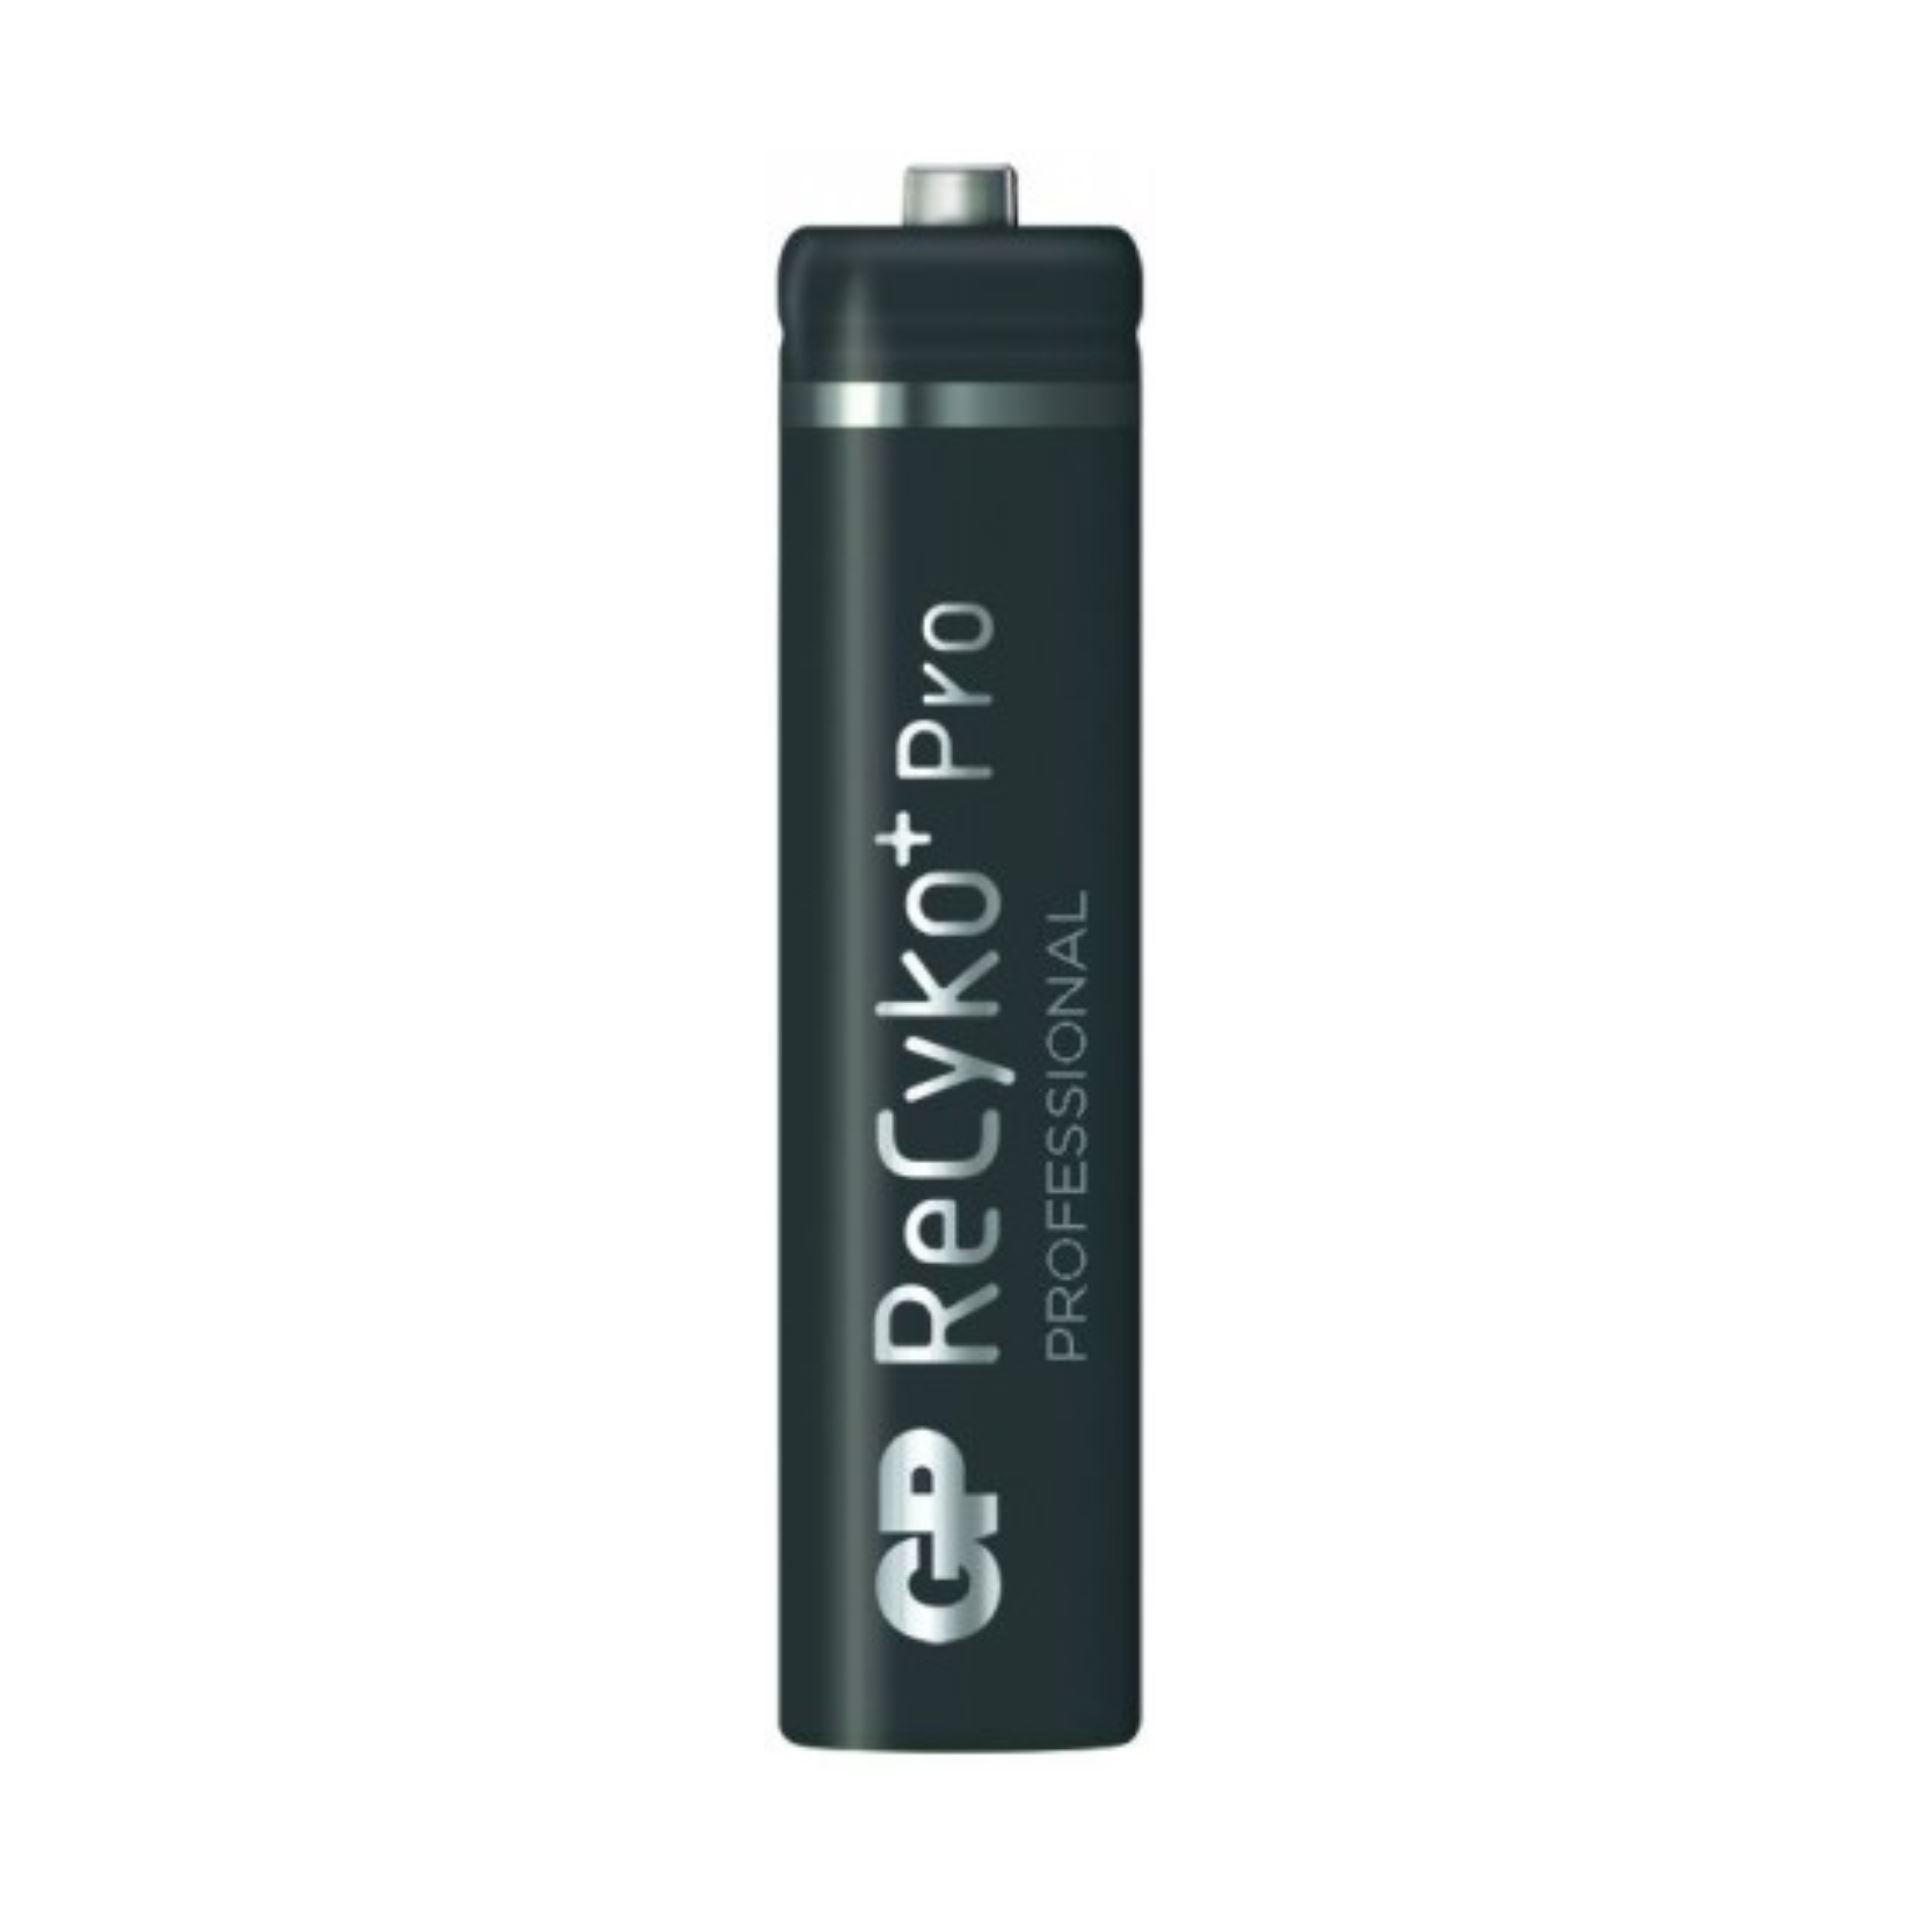 Baterija polnilna AA-2000 mAh Ni-Mh  GP ReCyko+ Pro 2 kom